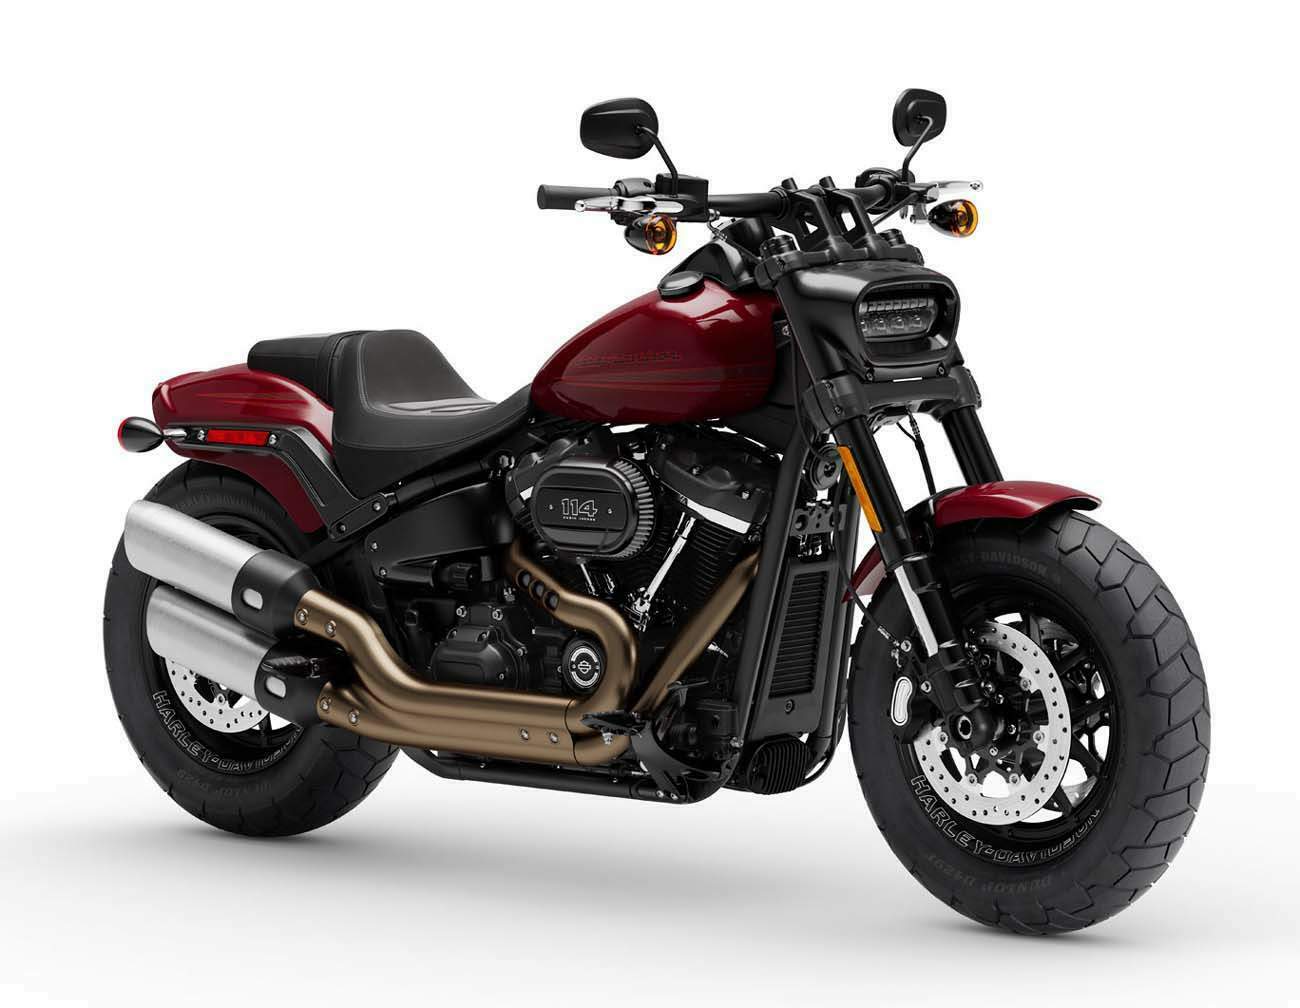 Harley Davidson Harley Davidson Softail Fat Bob 114 2020 Technical Specifications